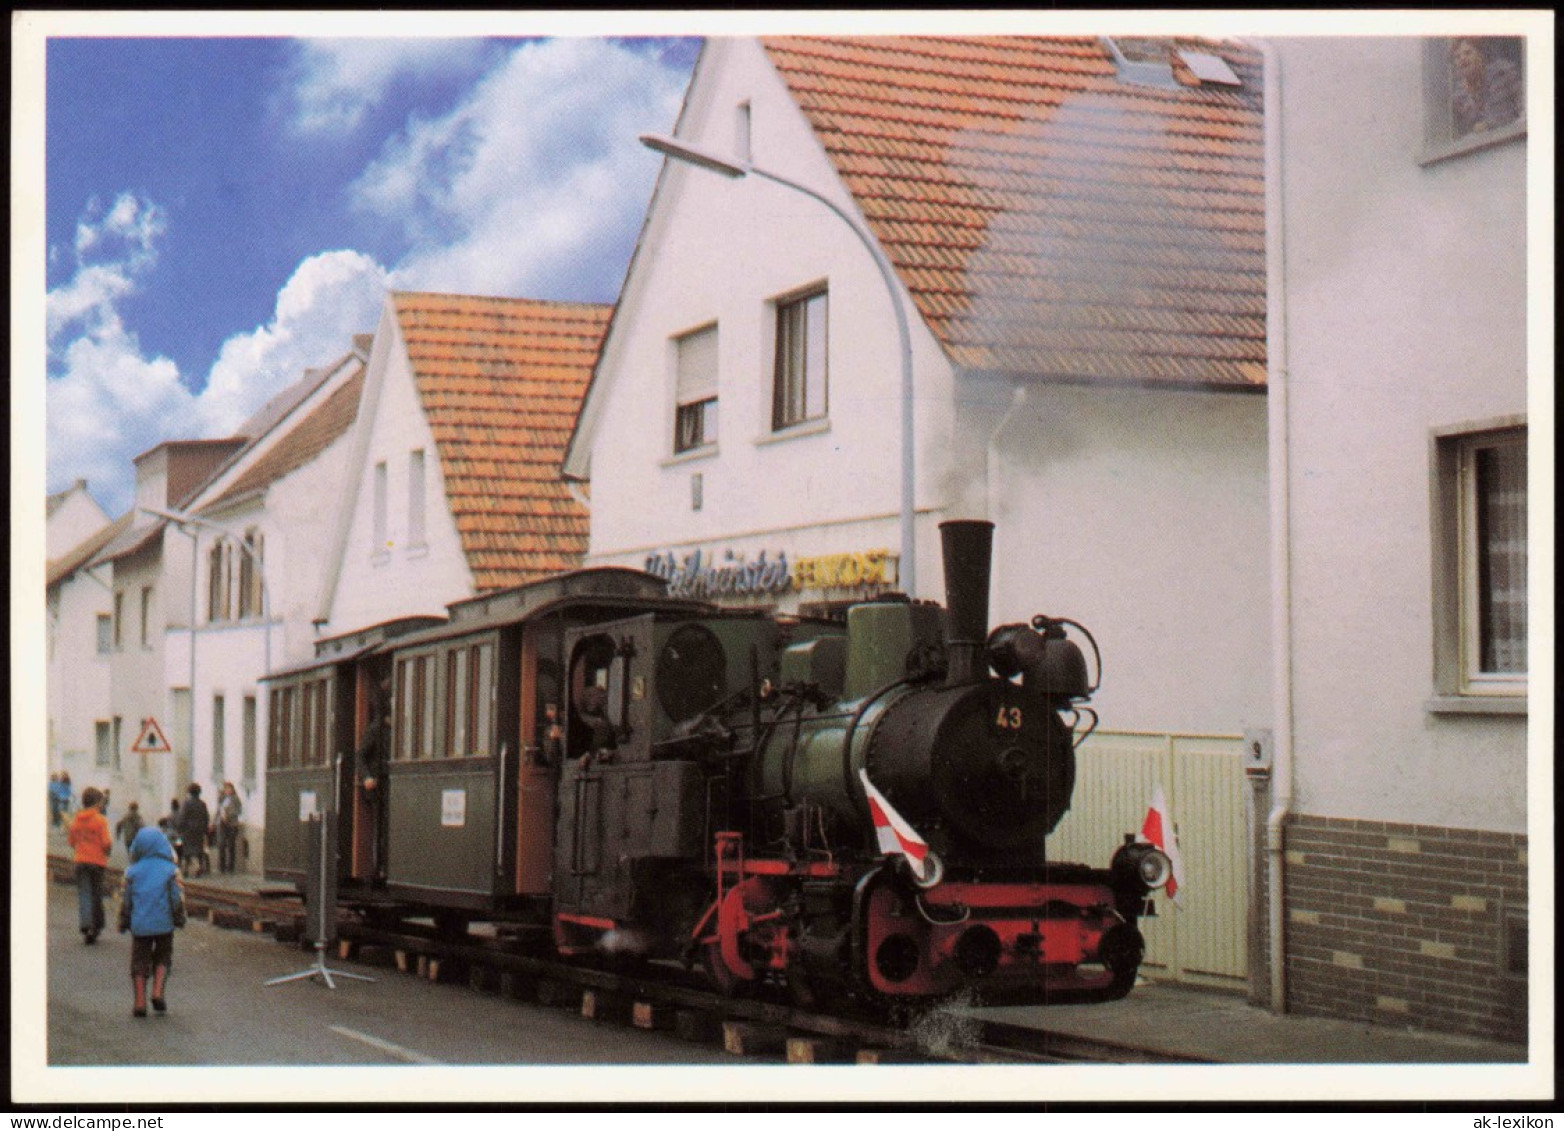 Lok 43 Ehem. Neunkirchner-Eisenwerke In Offenbach-Diezenbach 1978 - Trains